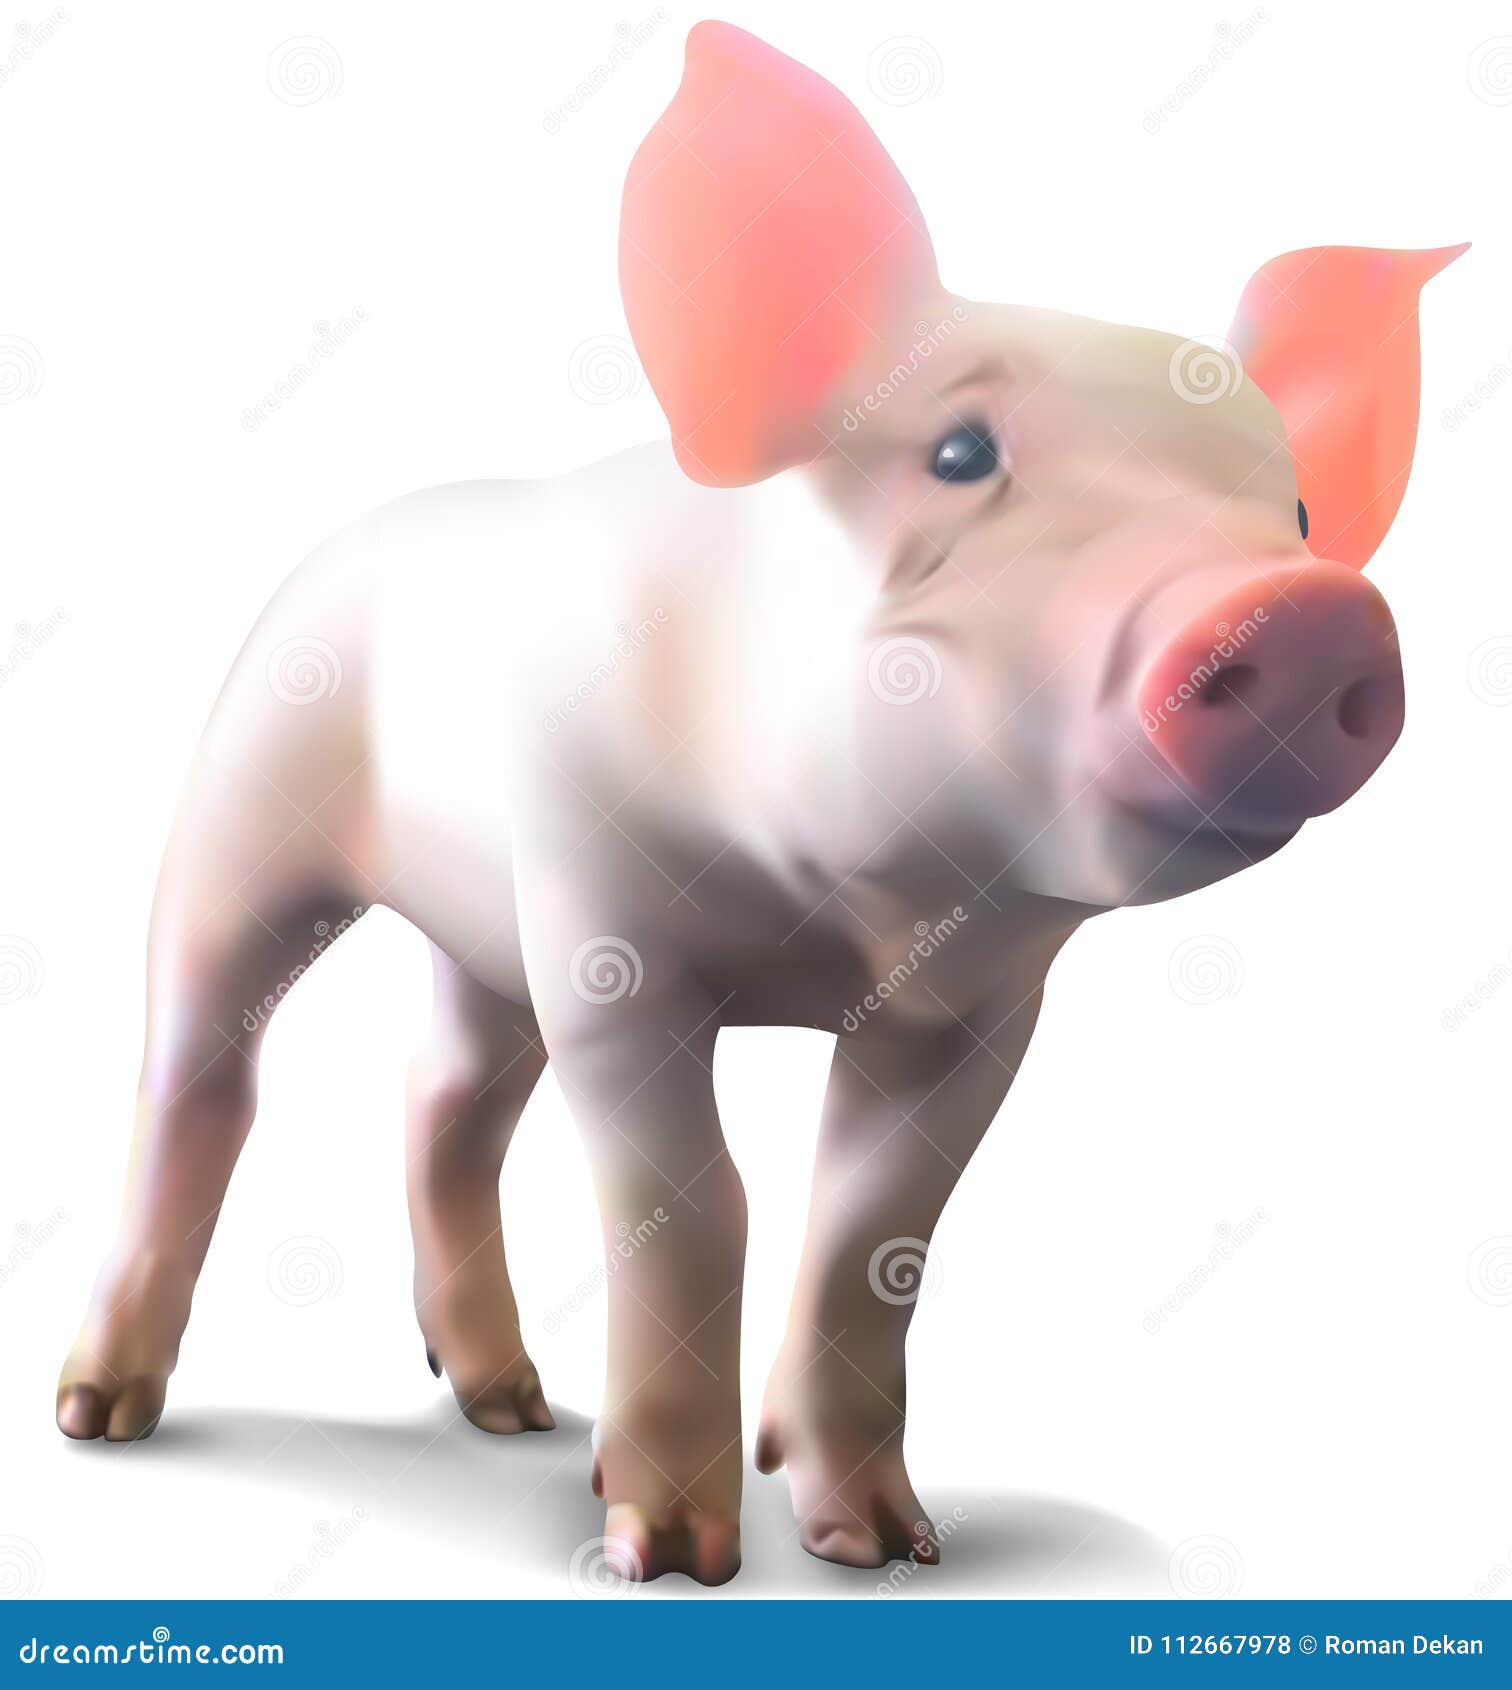 piglet on white background